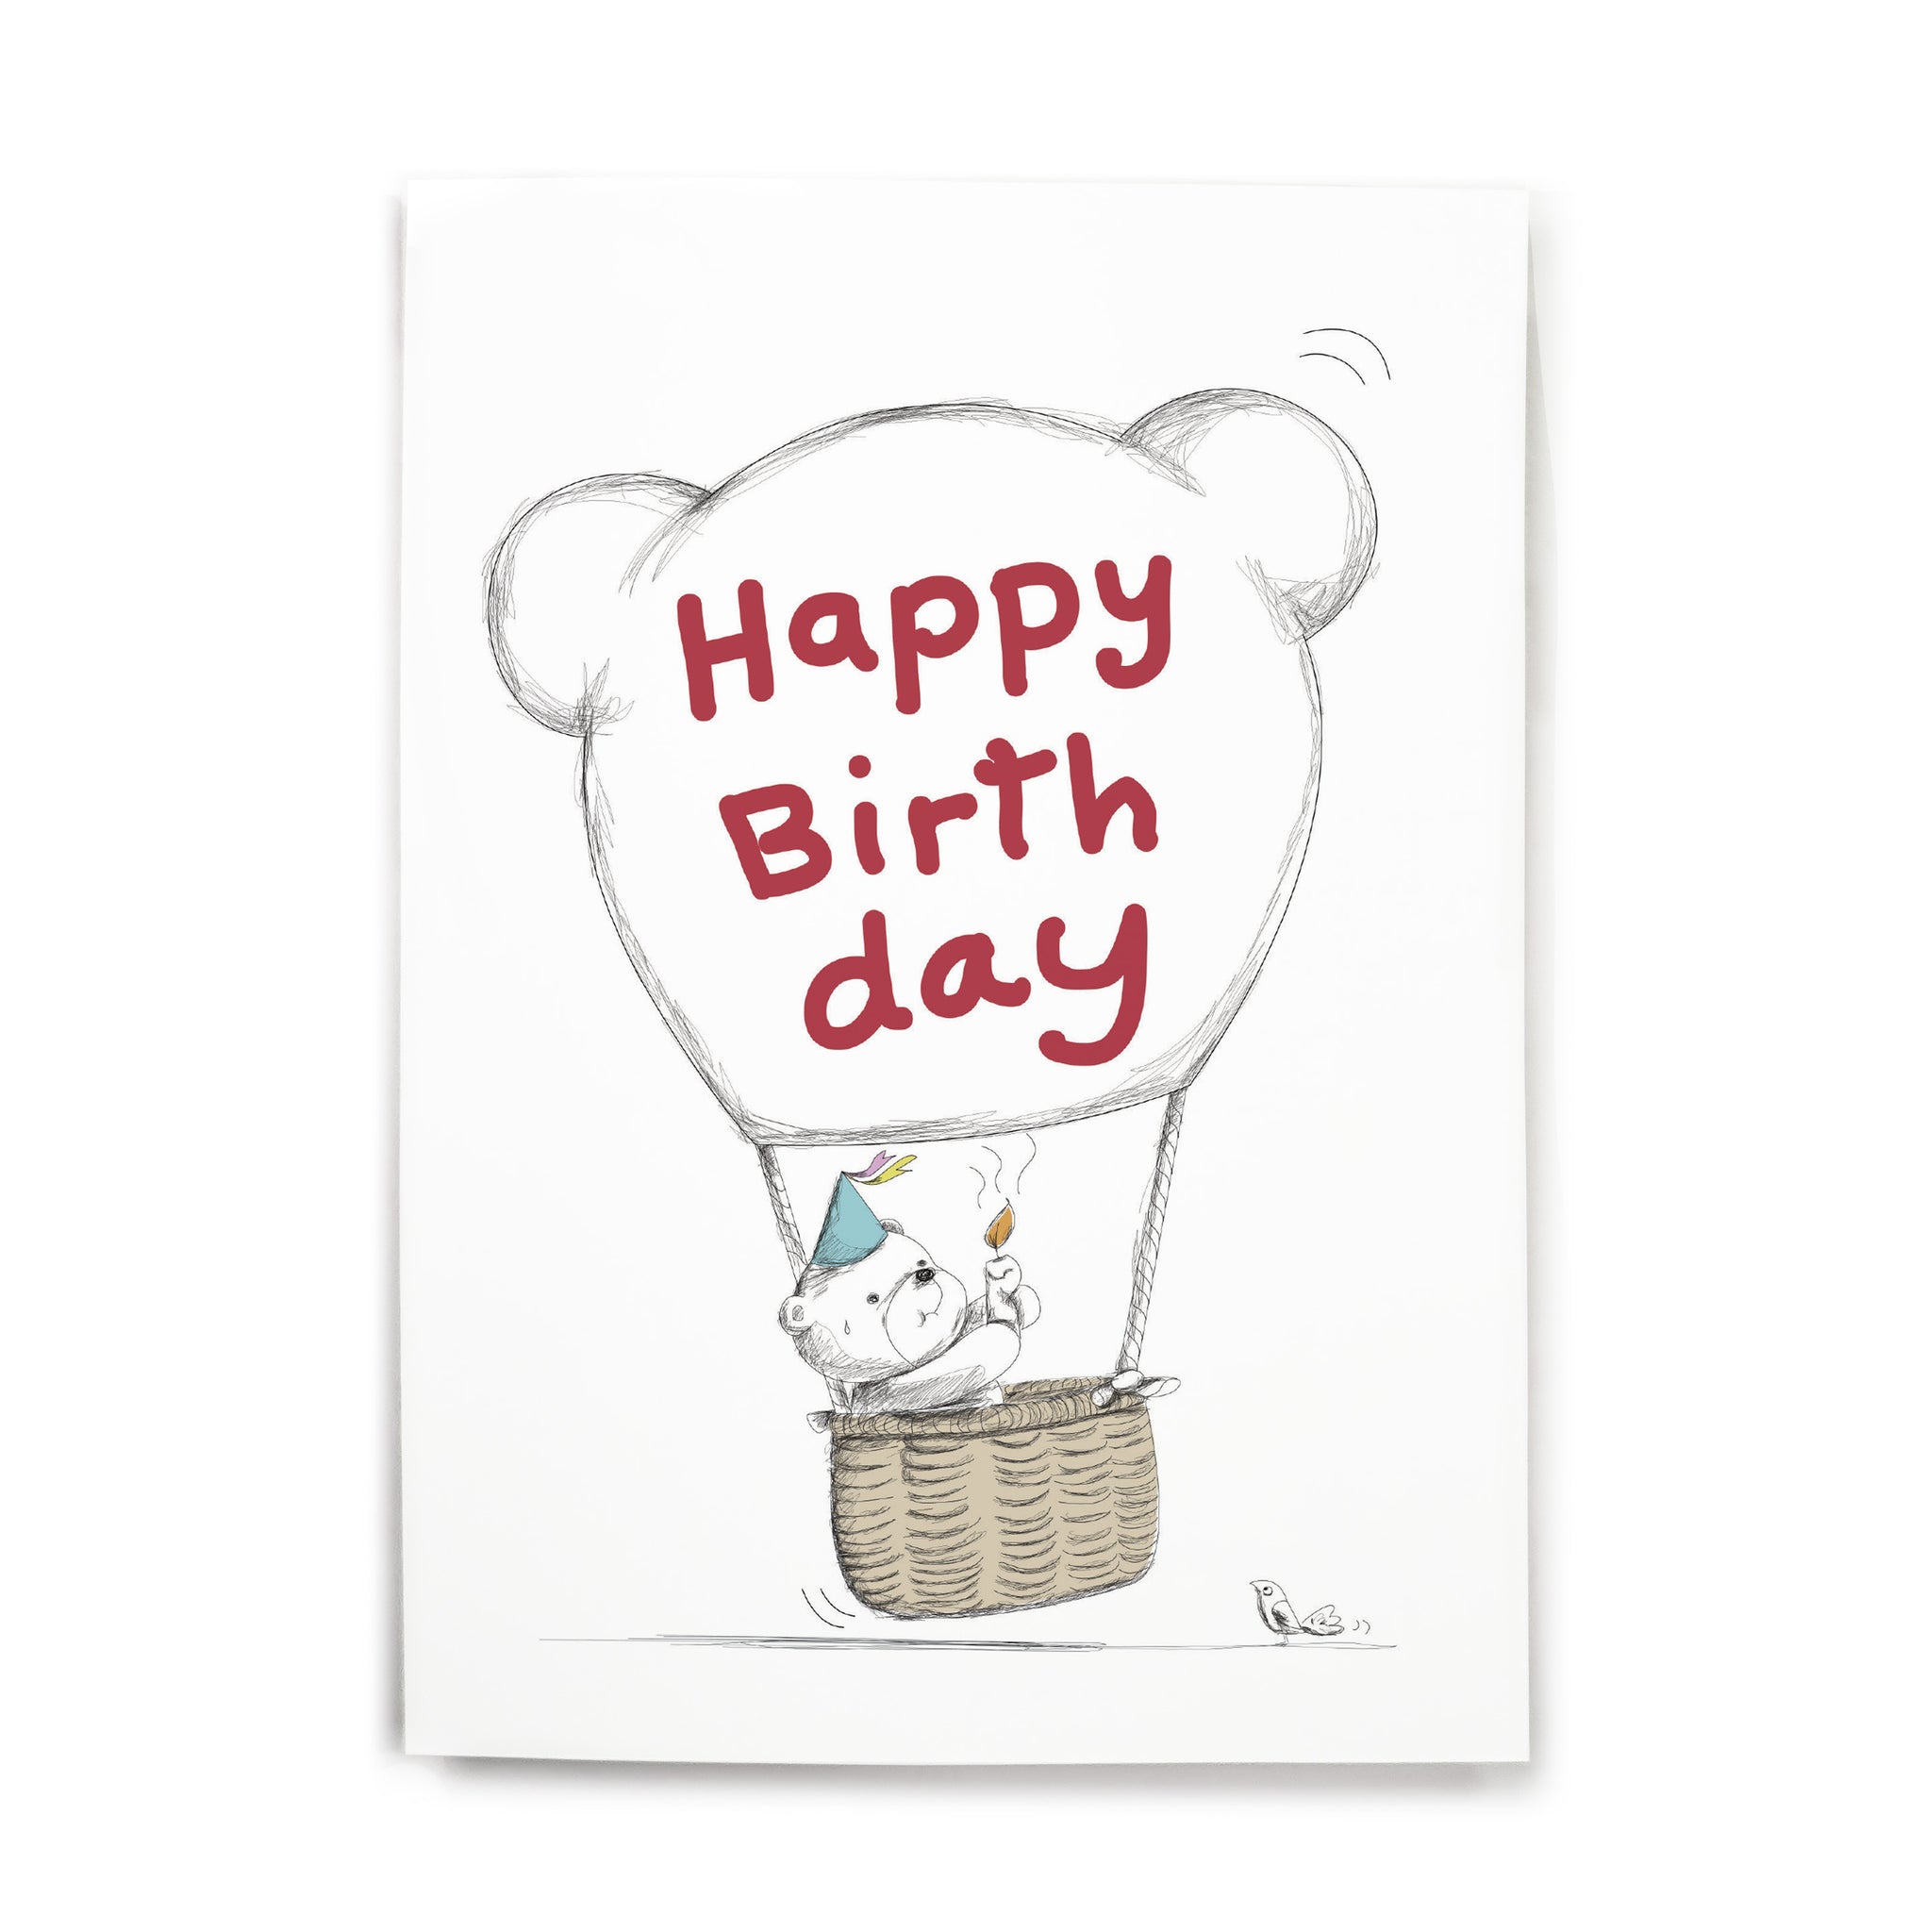 299102 Birthday Sketch Images Stock Photos  Vectors  Shutterstock